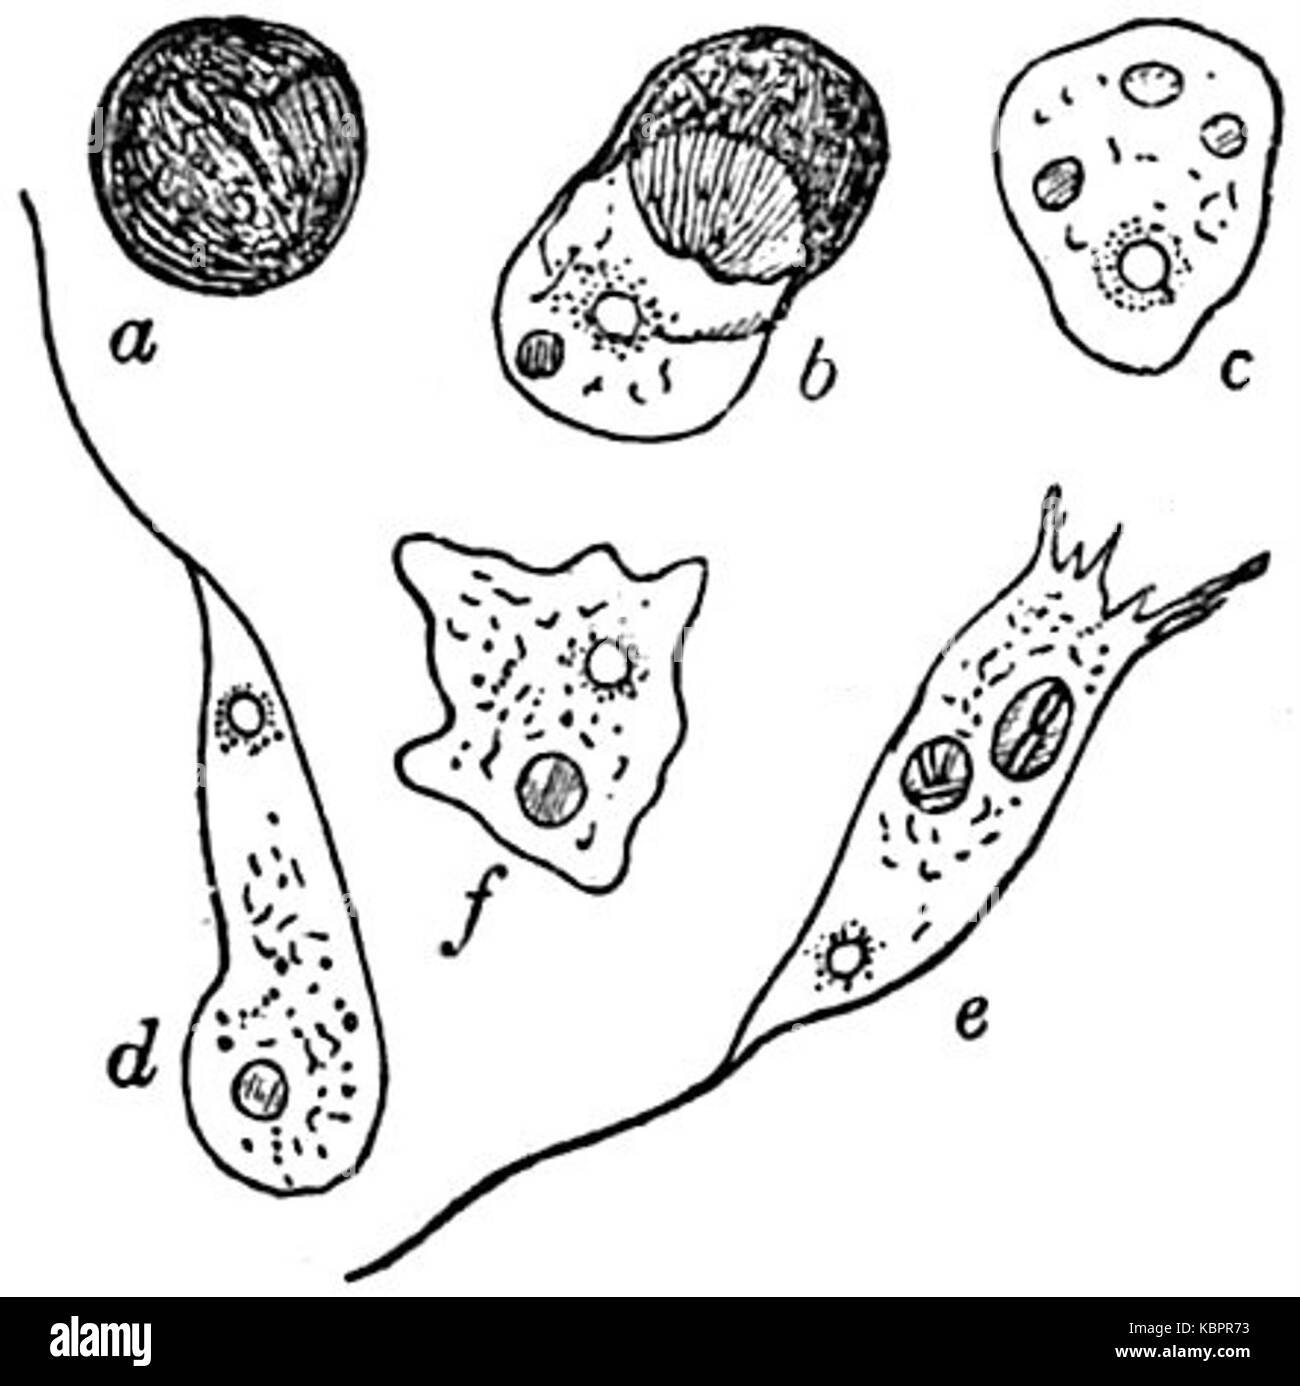 EB1911 Mycetozoa Didymium difforme hatching of the spores Stock Photo ...